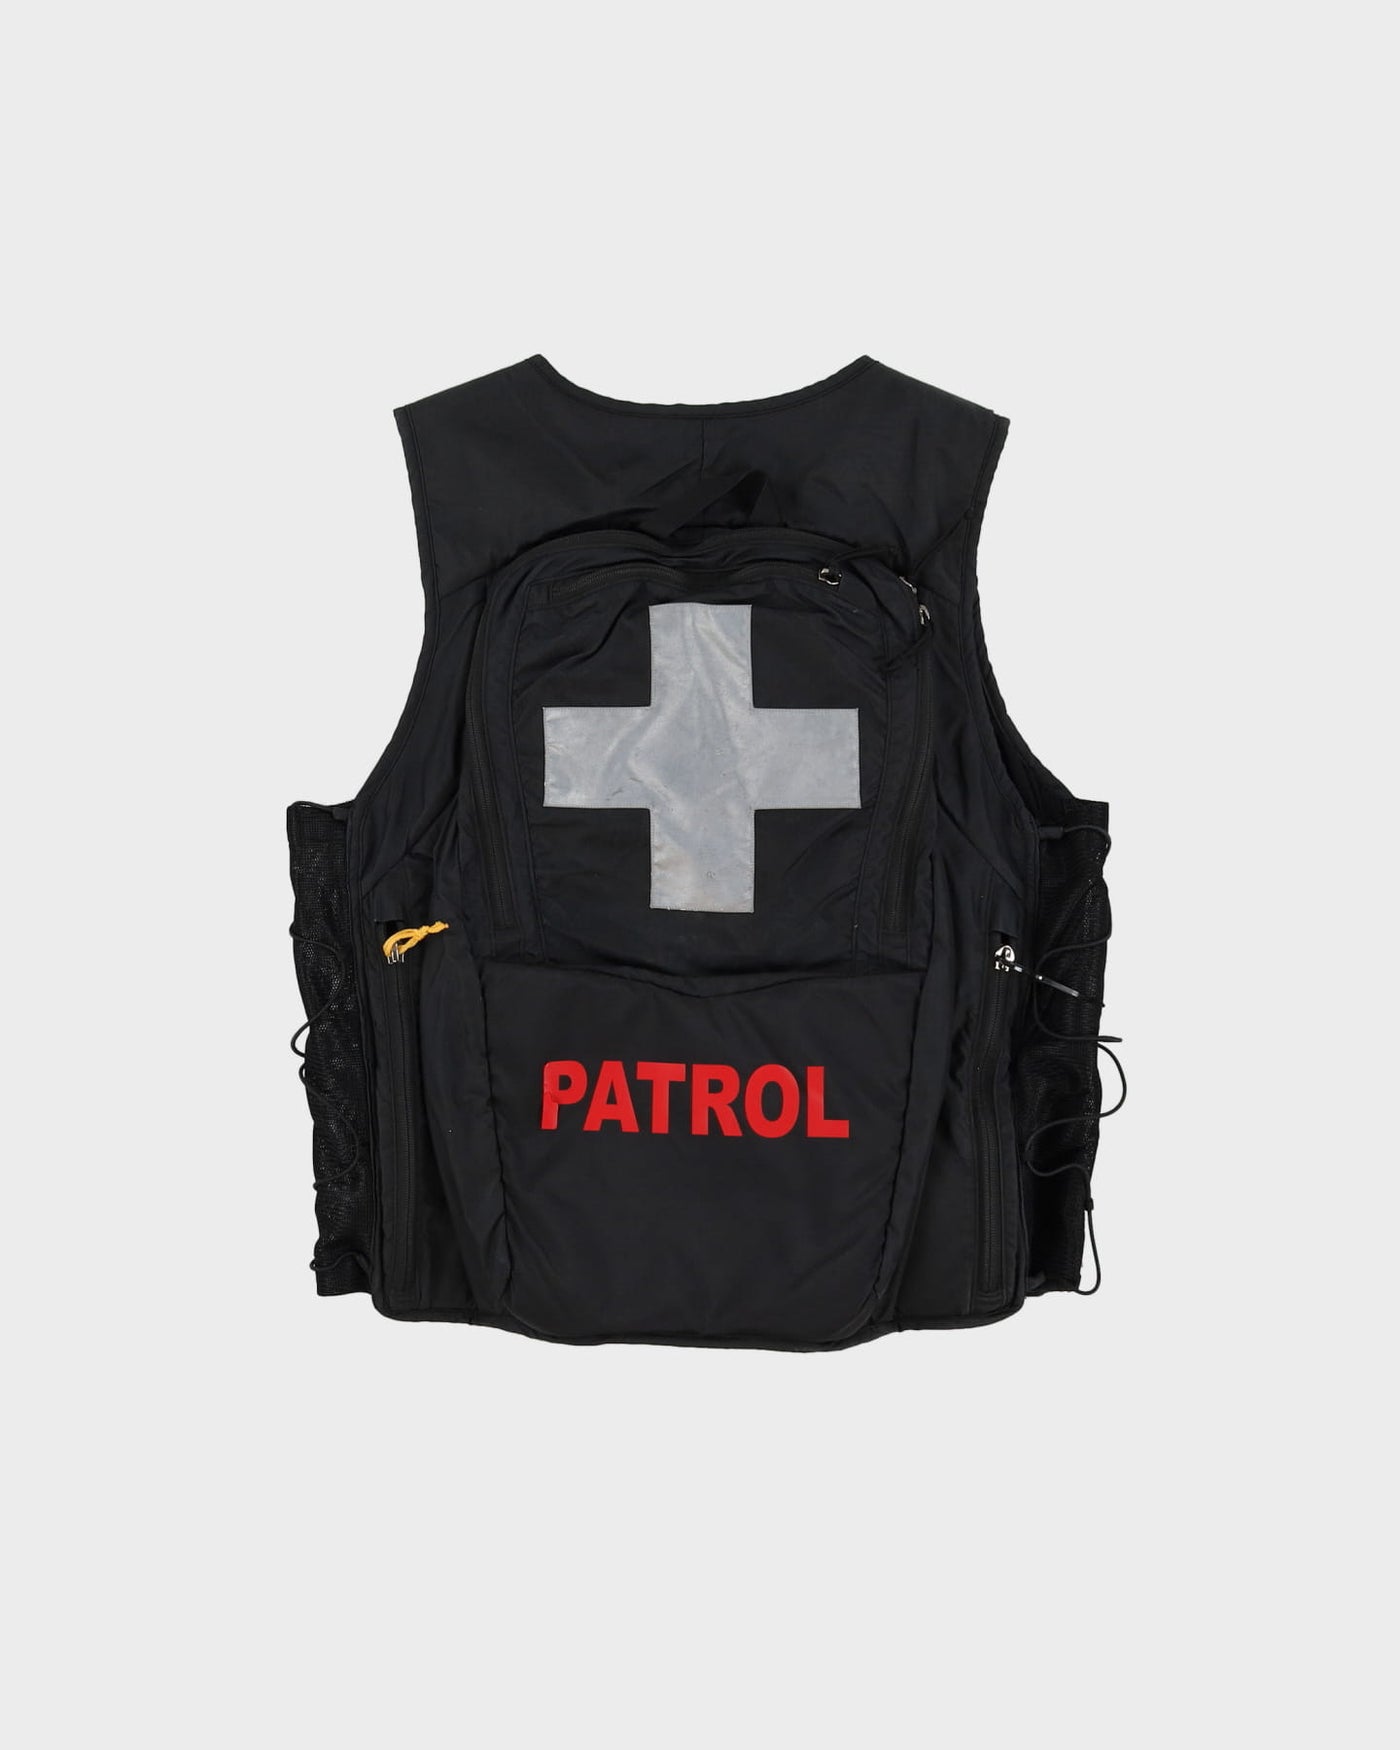 Vintage Arc'Teryx Black Tactical Patrol Vest / Oversized Sleeveless Gilet Jacket - L